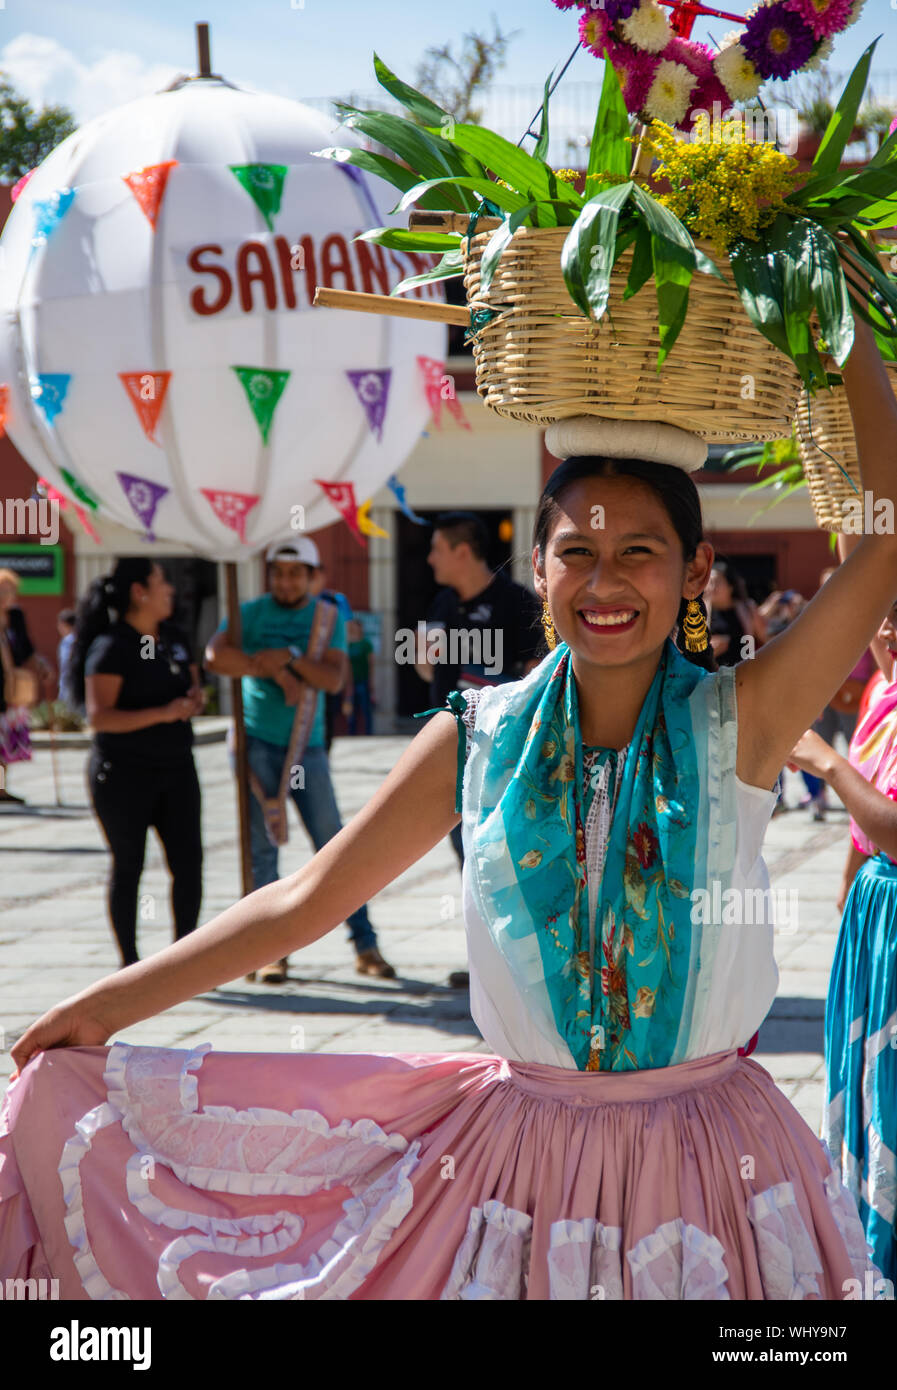 Dancing woman during Mexican wedding parade in Oaxaca, Mexico. Stock Photo